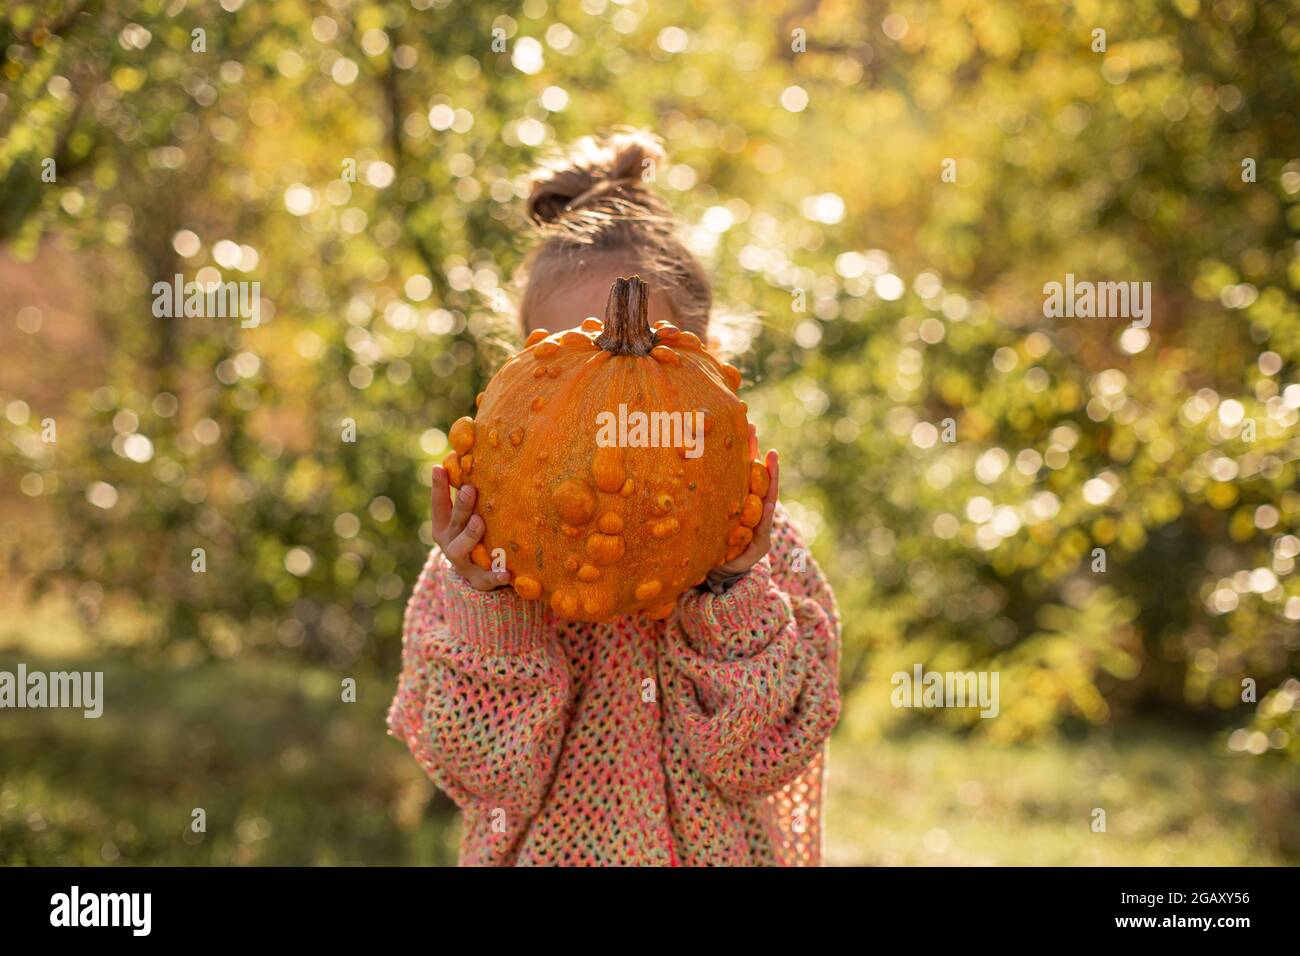 Deformed ugly orange pumpkin in a child hands. Stock Photo